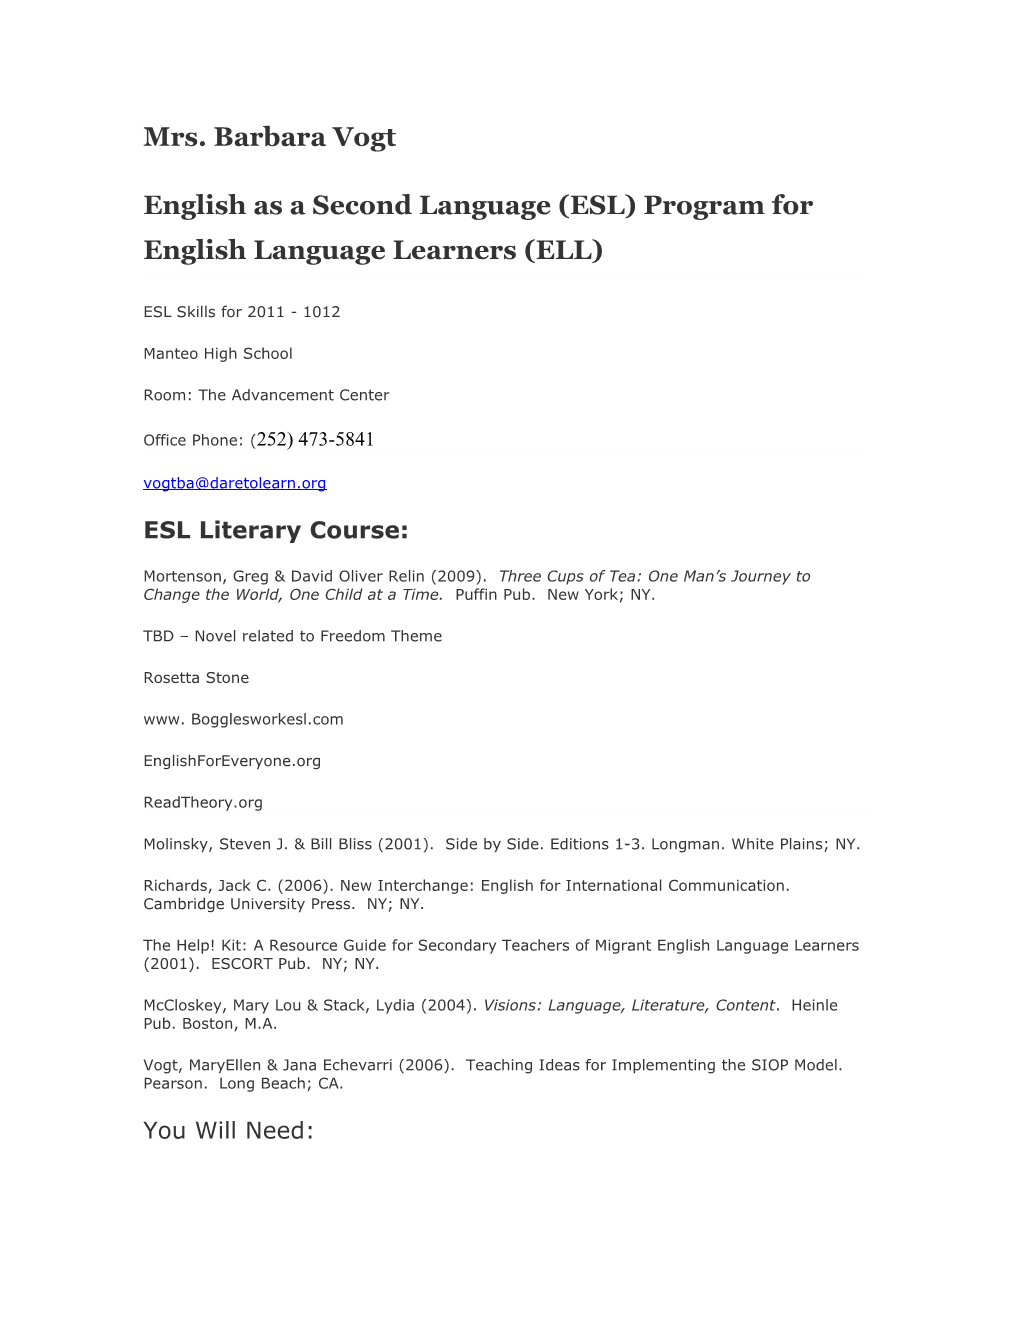 English As a Second Language (ESL) Program for English Language Learners (ELL)